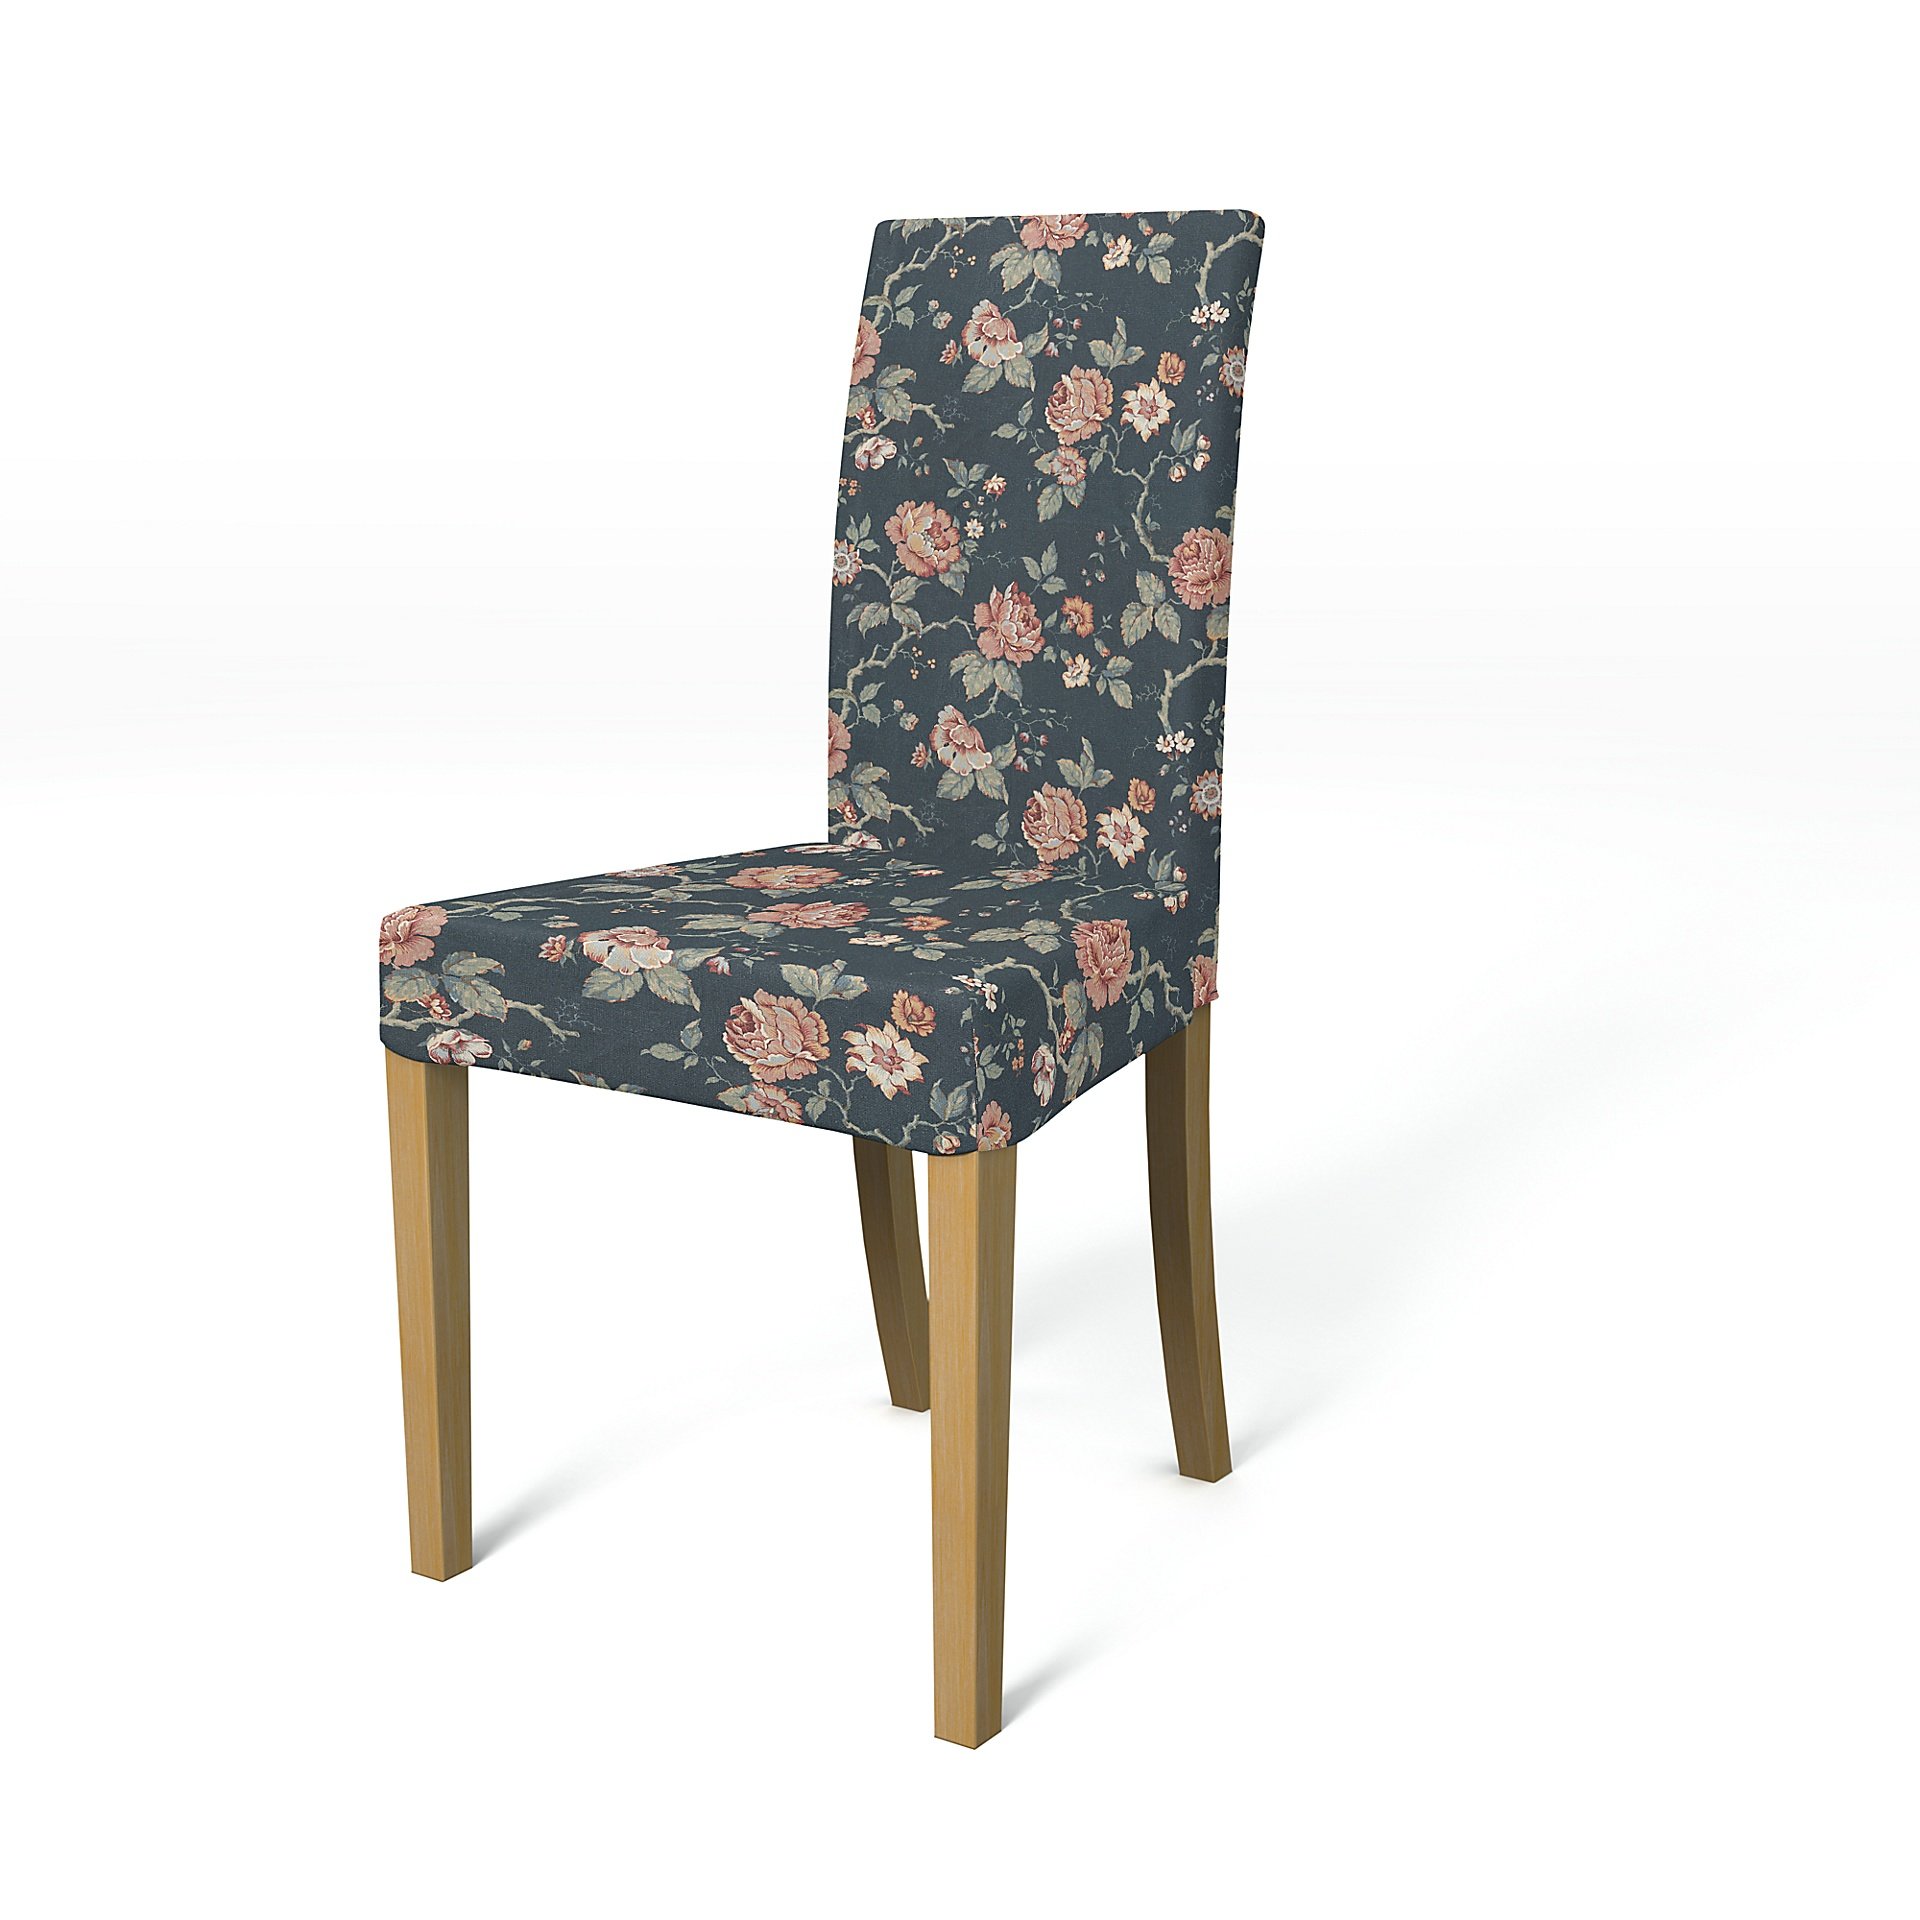 IKEA - Harry Dining Chair Cover, Rosentrad Dark, BEMZ x BORASTAPETER COLLECTION - Bemz